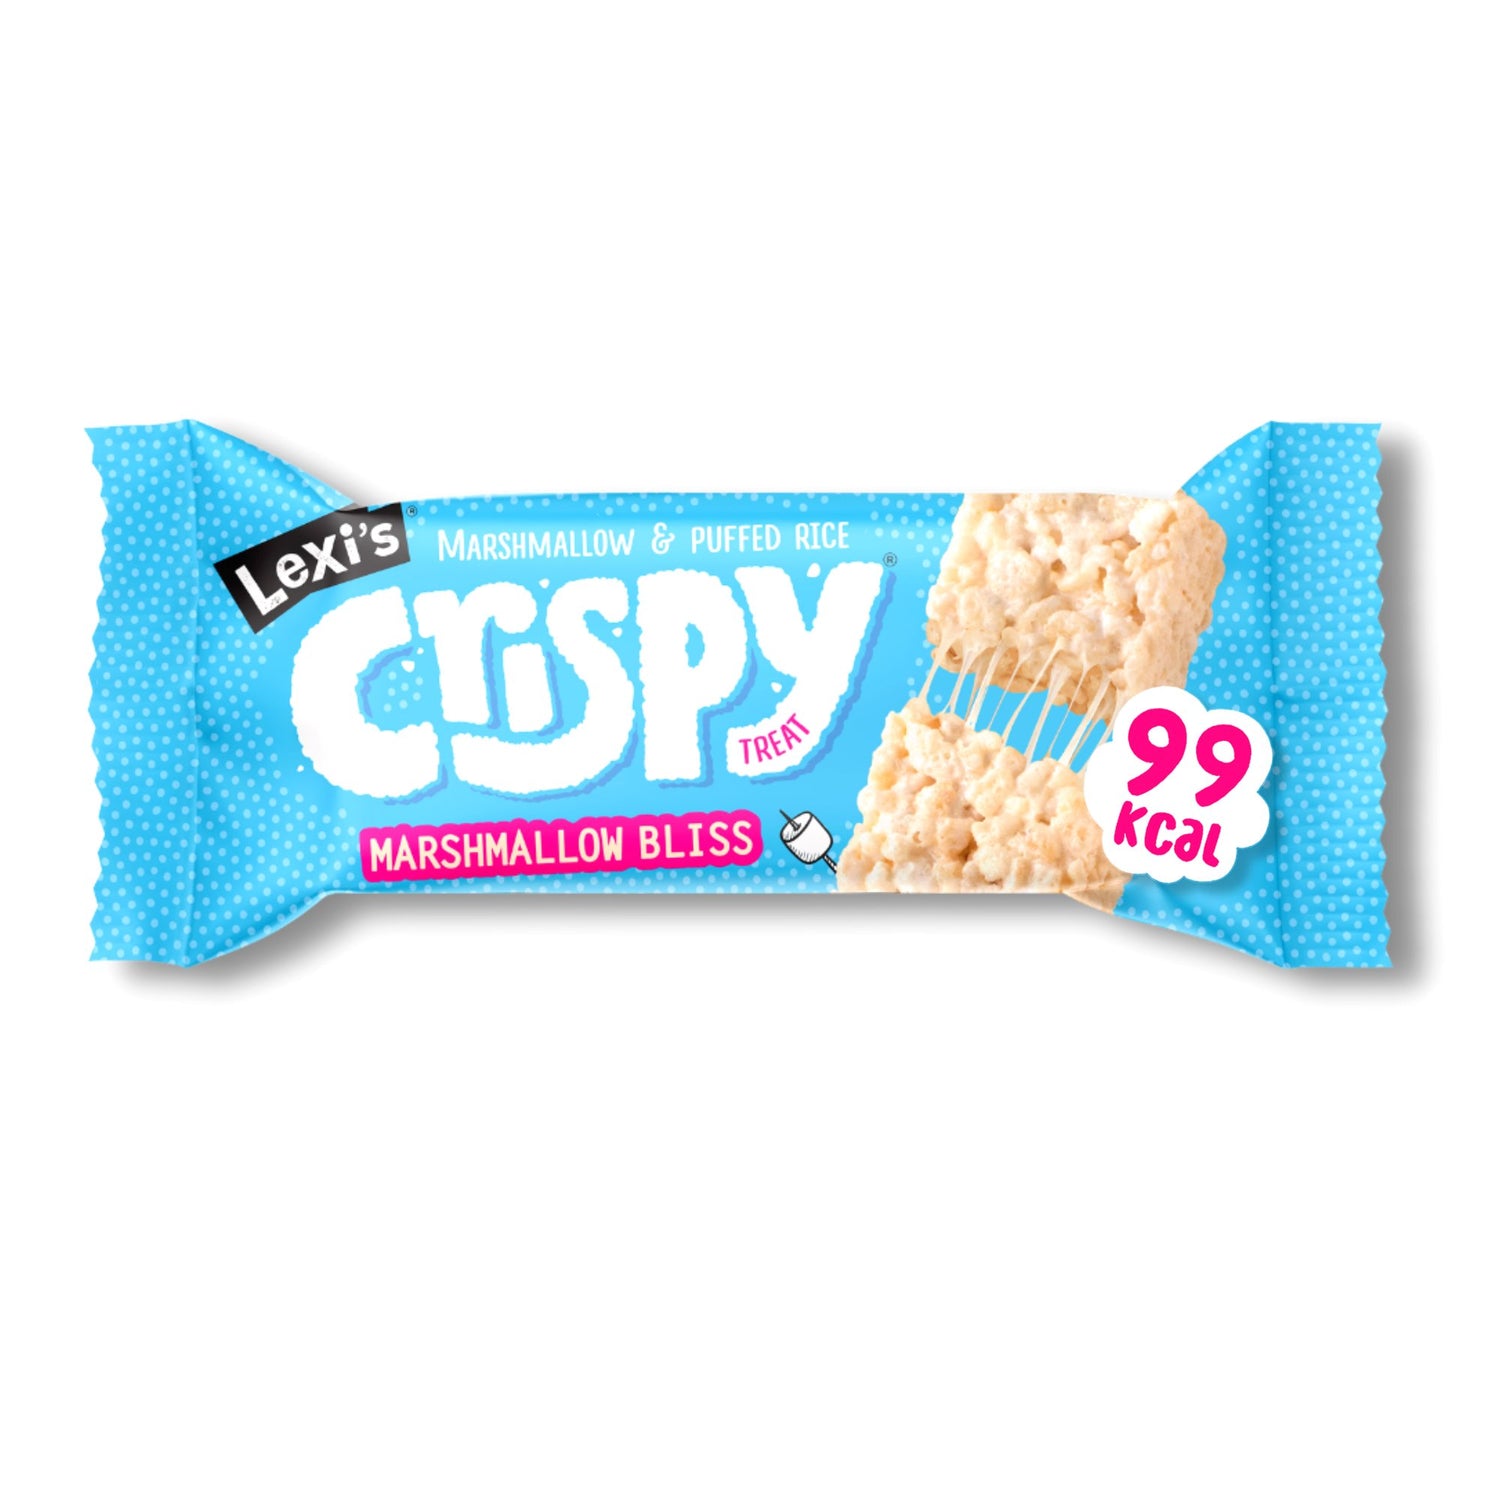 Lexi's Ooey Gooey Crispy Treats! 99 Calories x 3 flavours - theskinnyfoodco